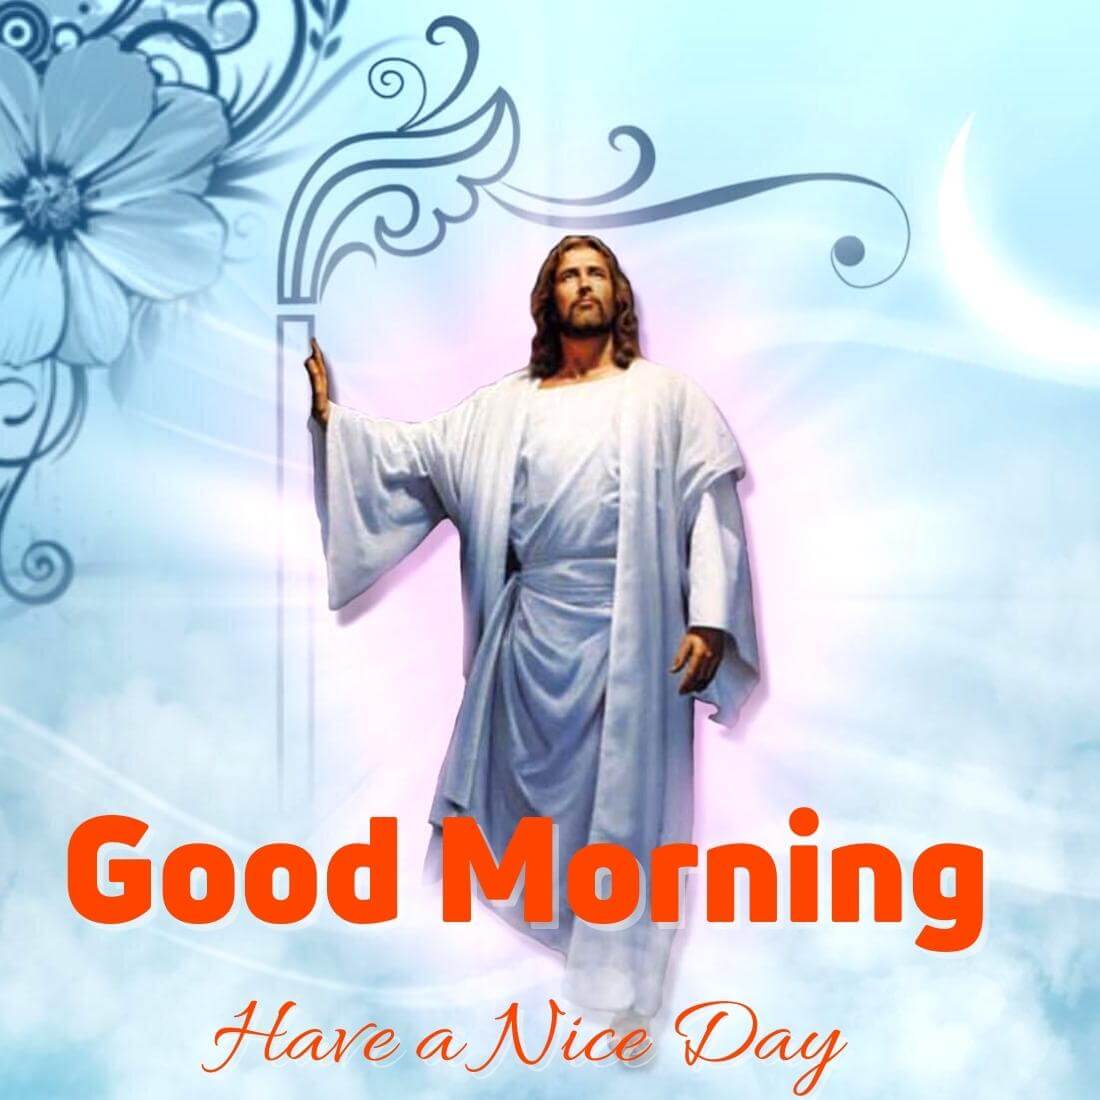 Free HD Lord Jesus good morning Images Pics Download Free